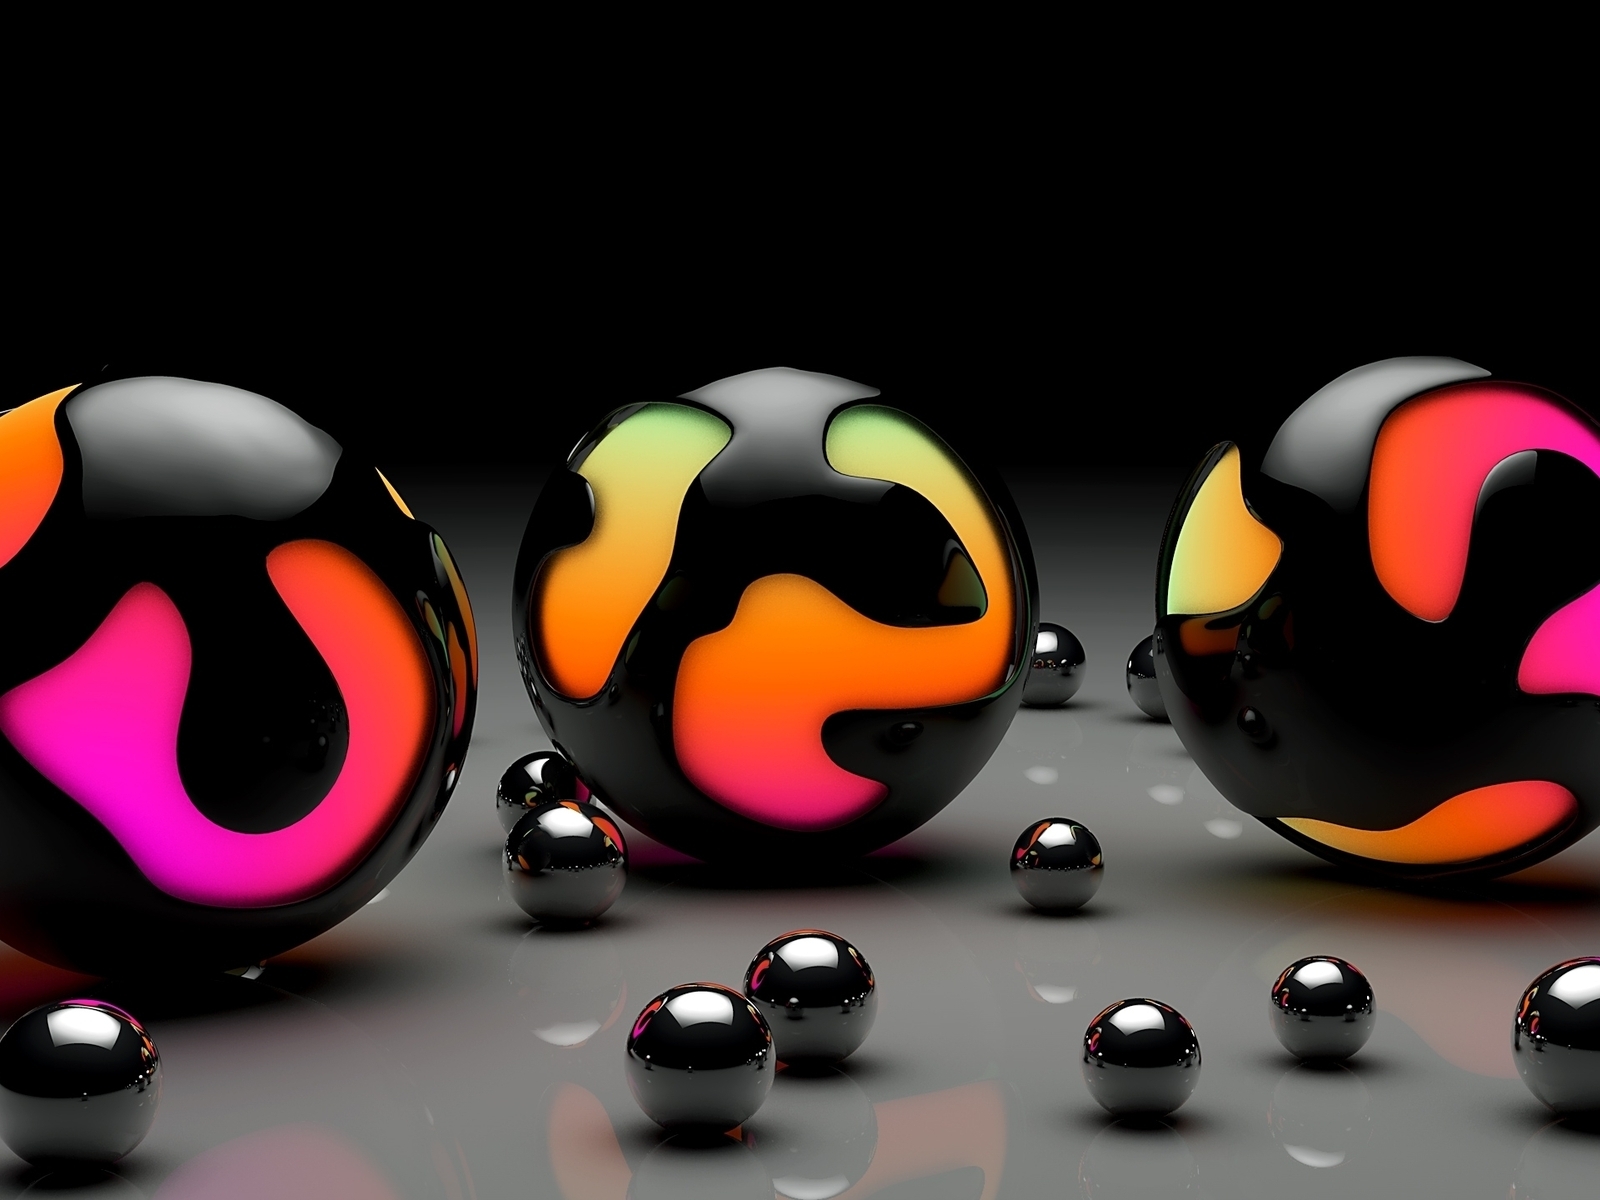 Balls Design for 1600 x 1200 resolution